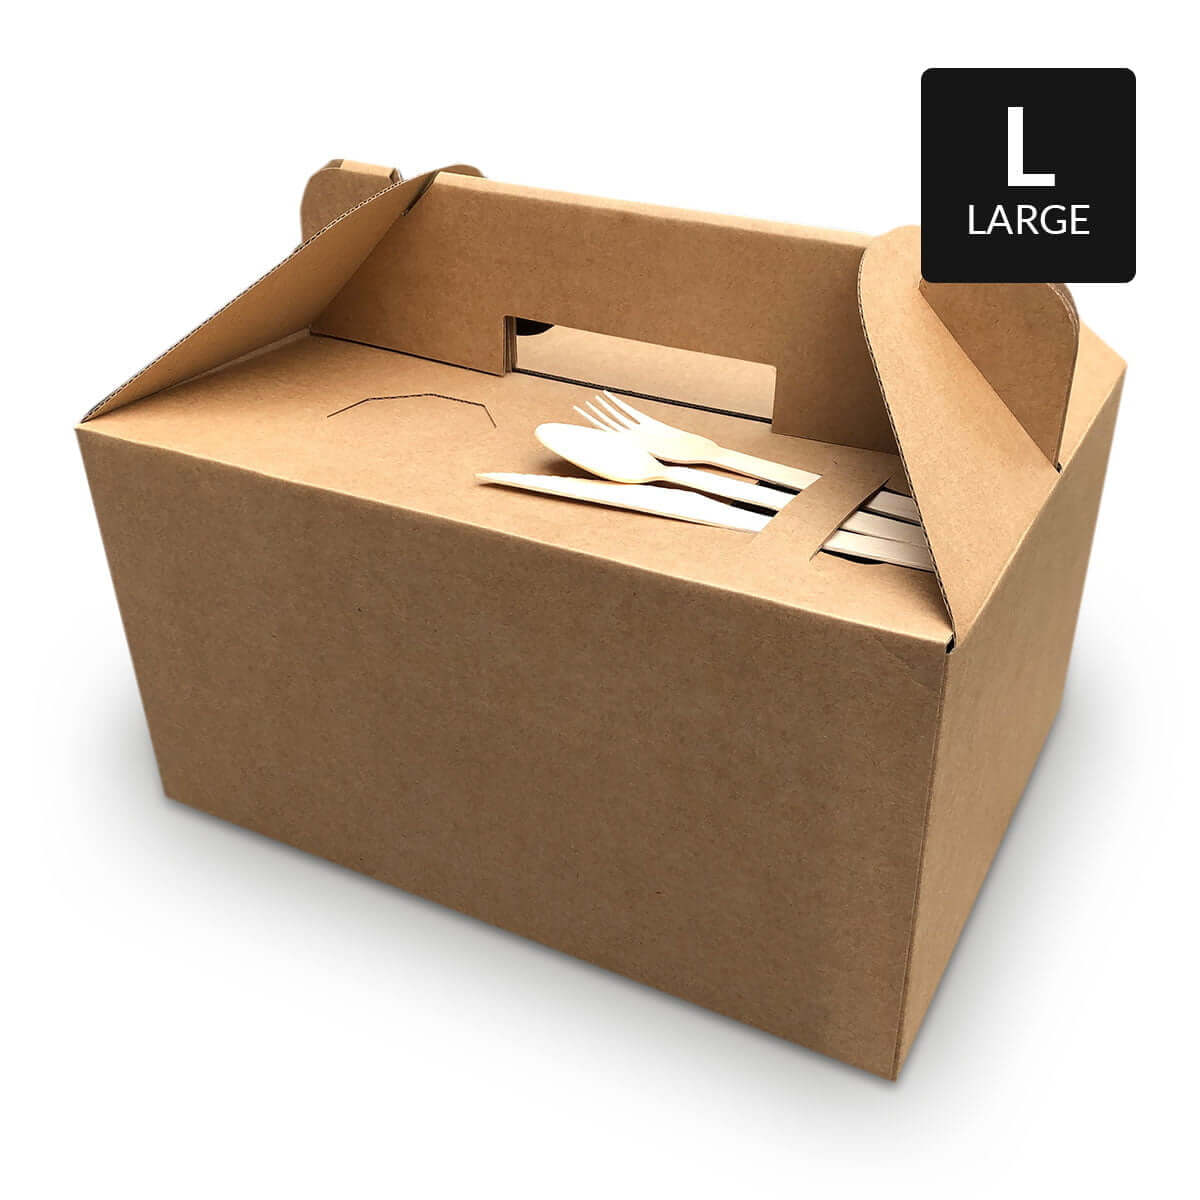 Succes Miljard onderbreken Picknickbox - Picknick box van karton | Cateringdoos